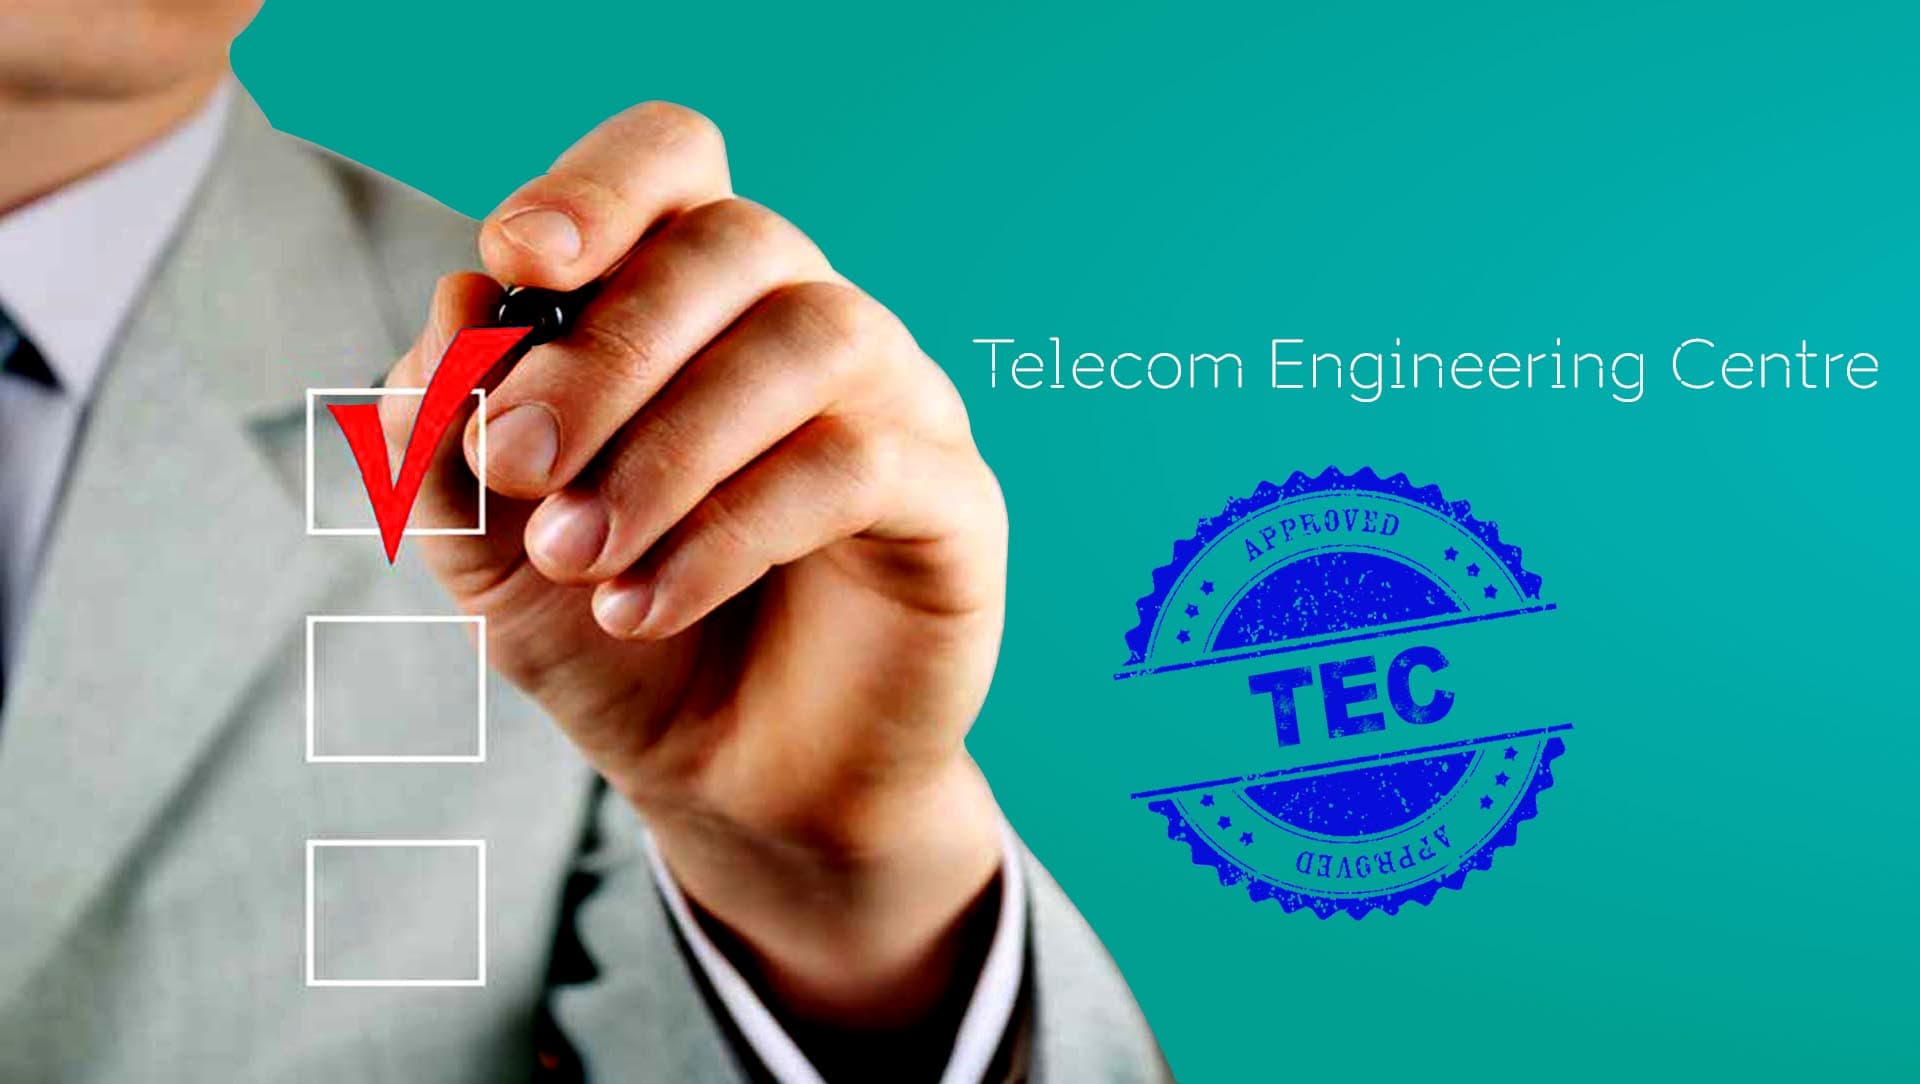 TEC(Telecom Engineering Centre) Mandatory Compliance of The Mobile Association